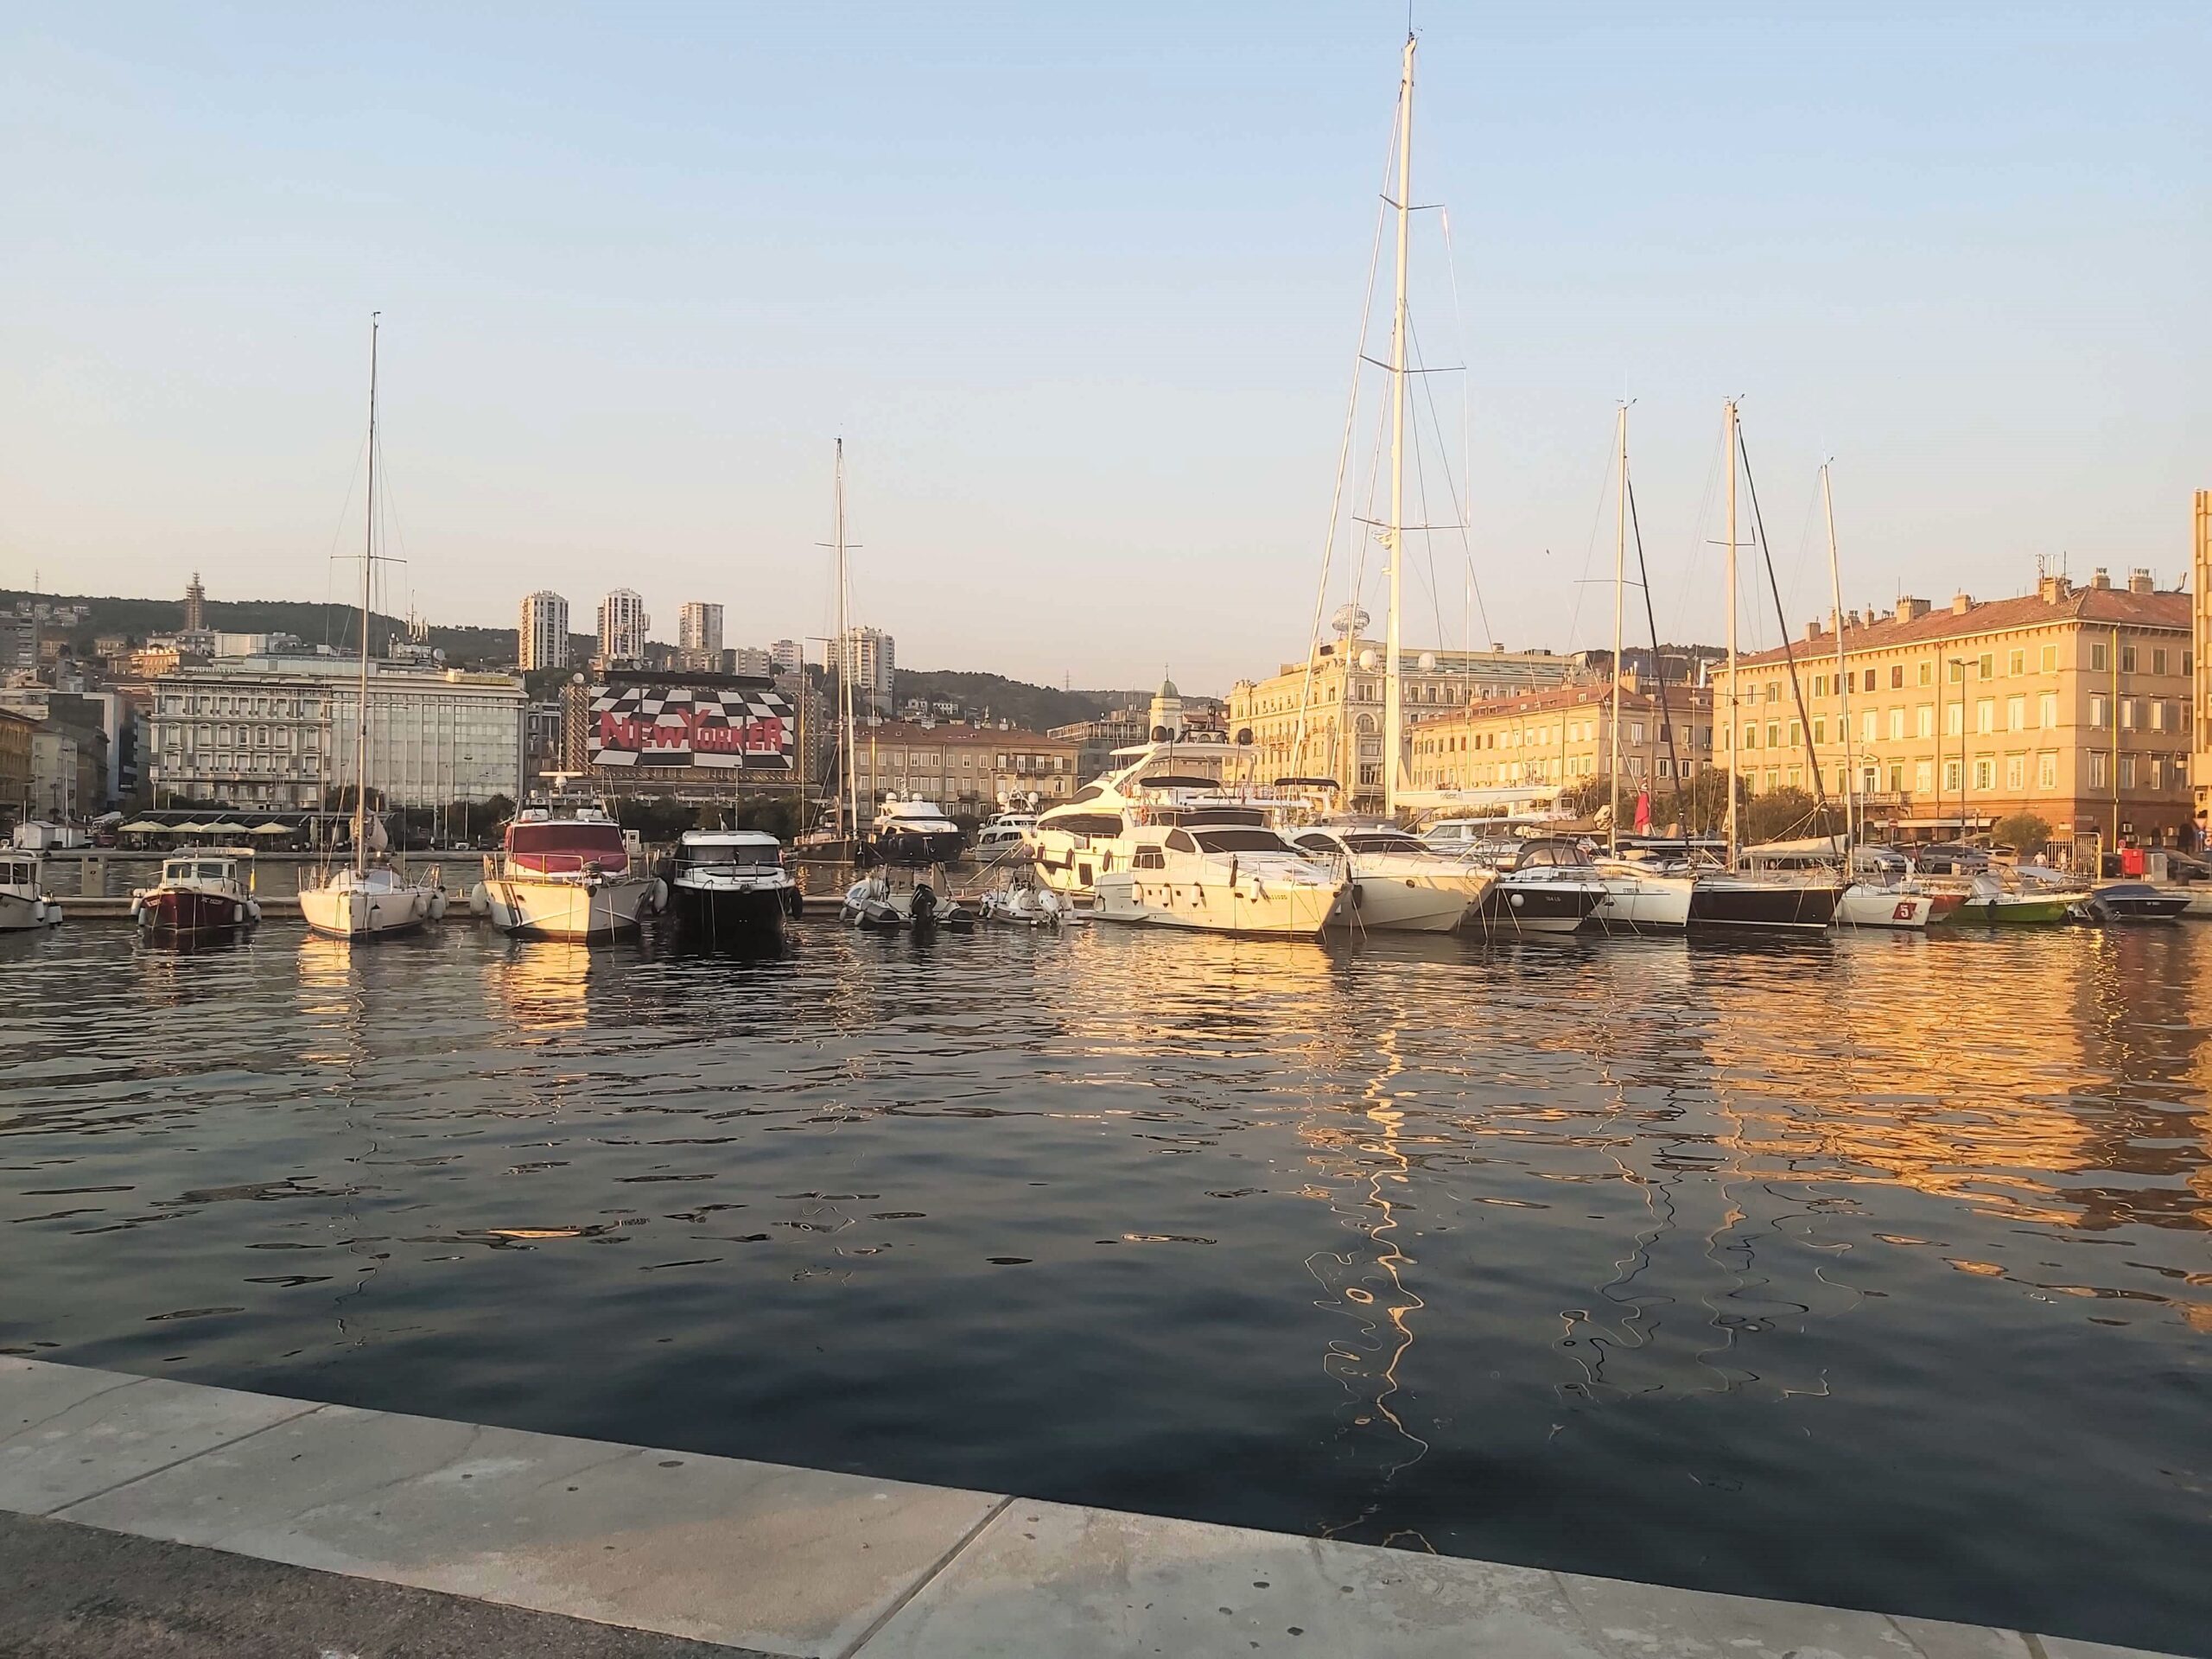 Boats lined up at the harbour, Rijeka, Croatia